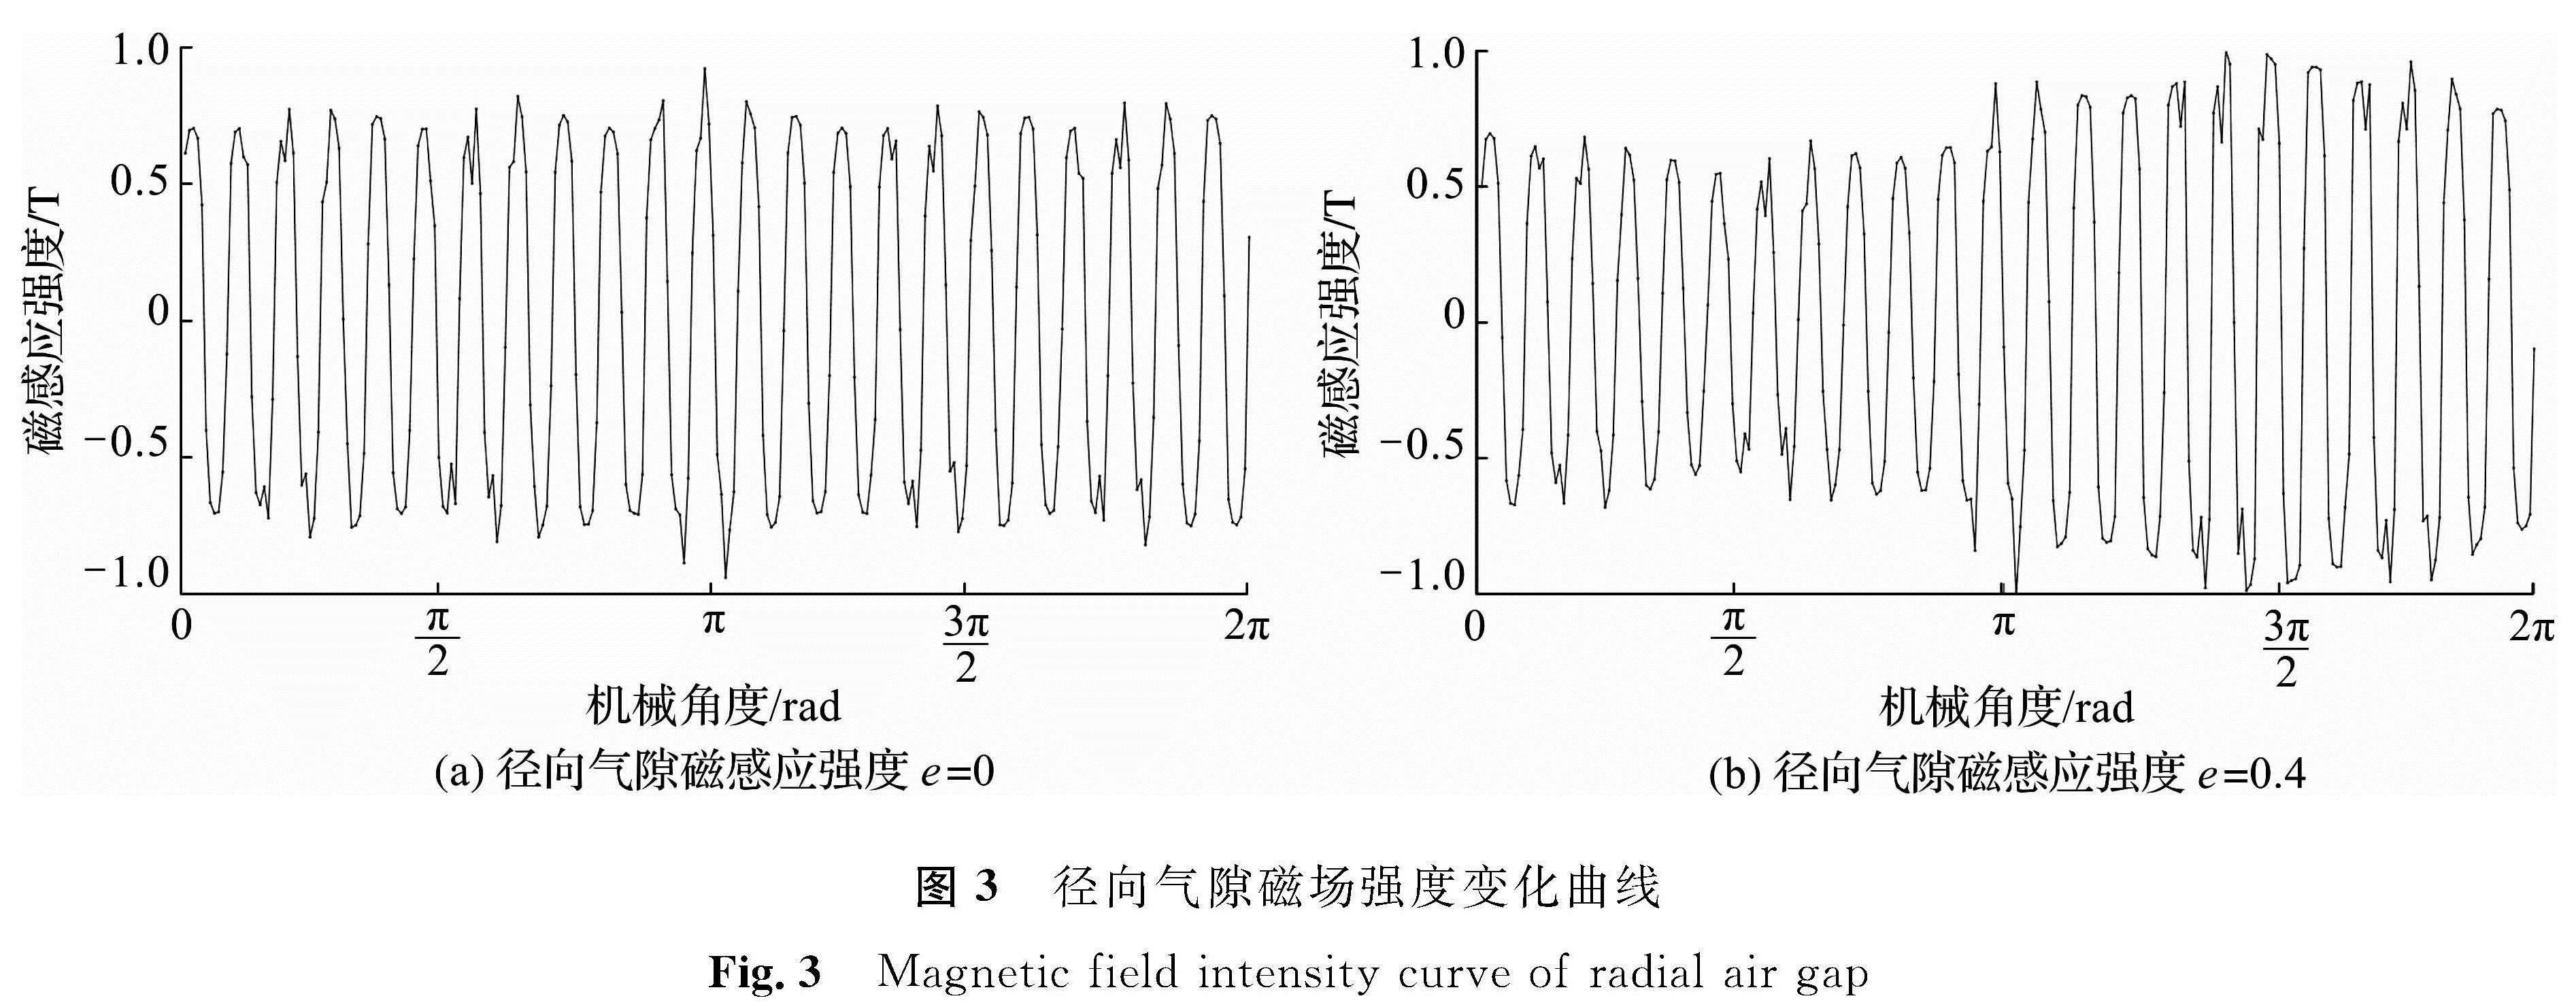 图3 径向气隙磁场强度变化曲线<br/>Fig.3 Magnetic field intensity curve of radial air gap